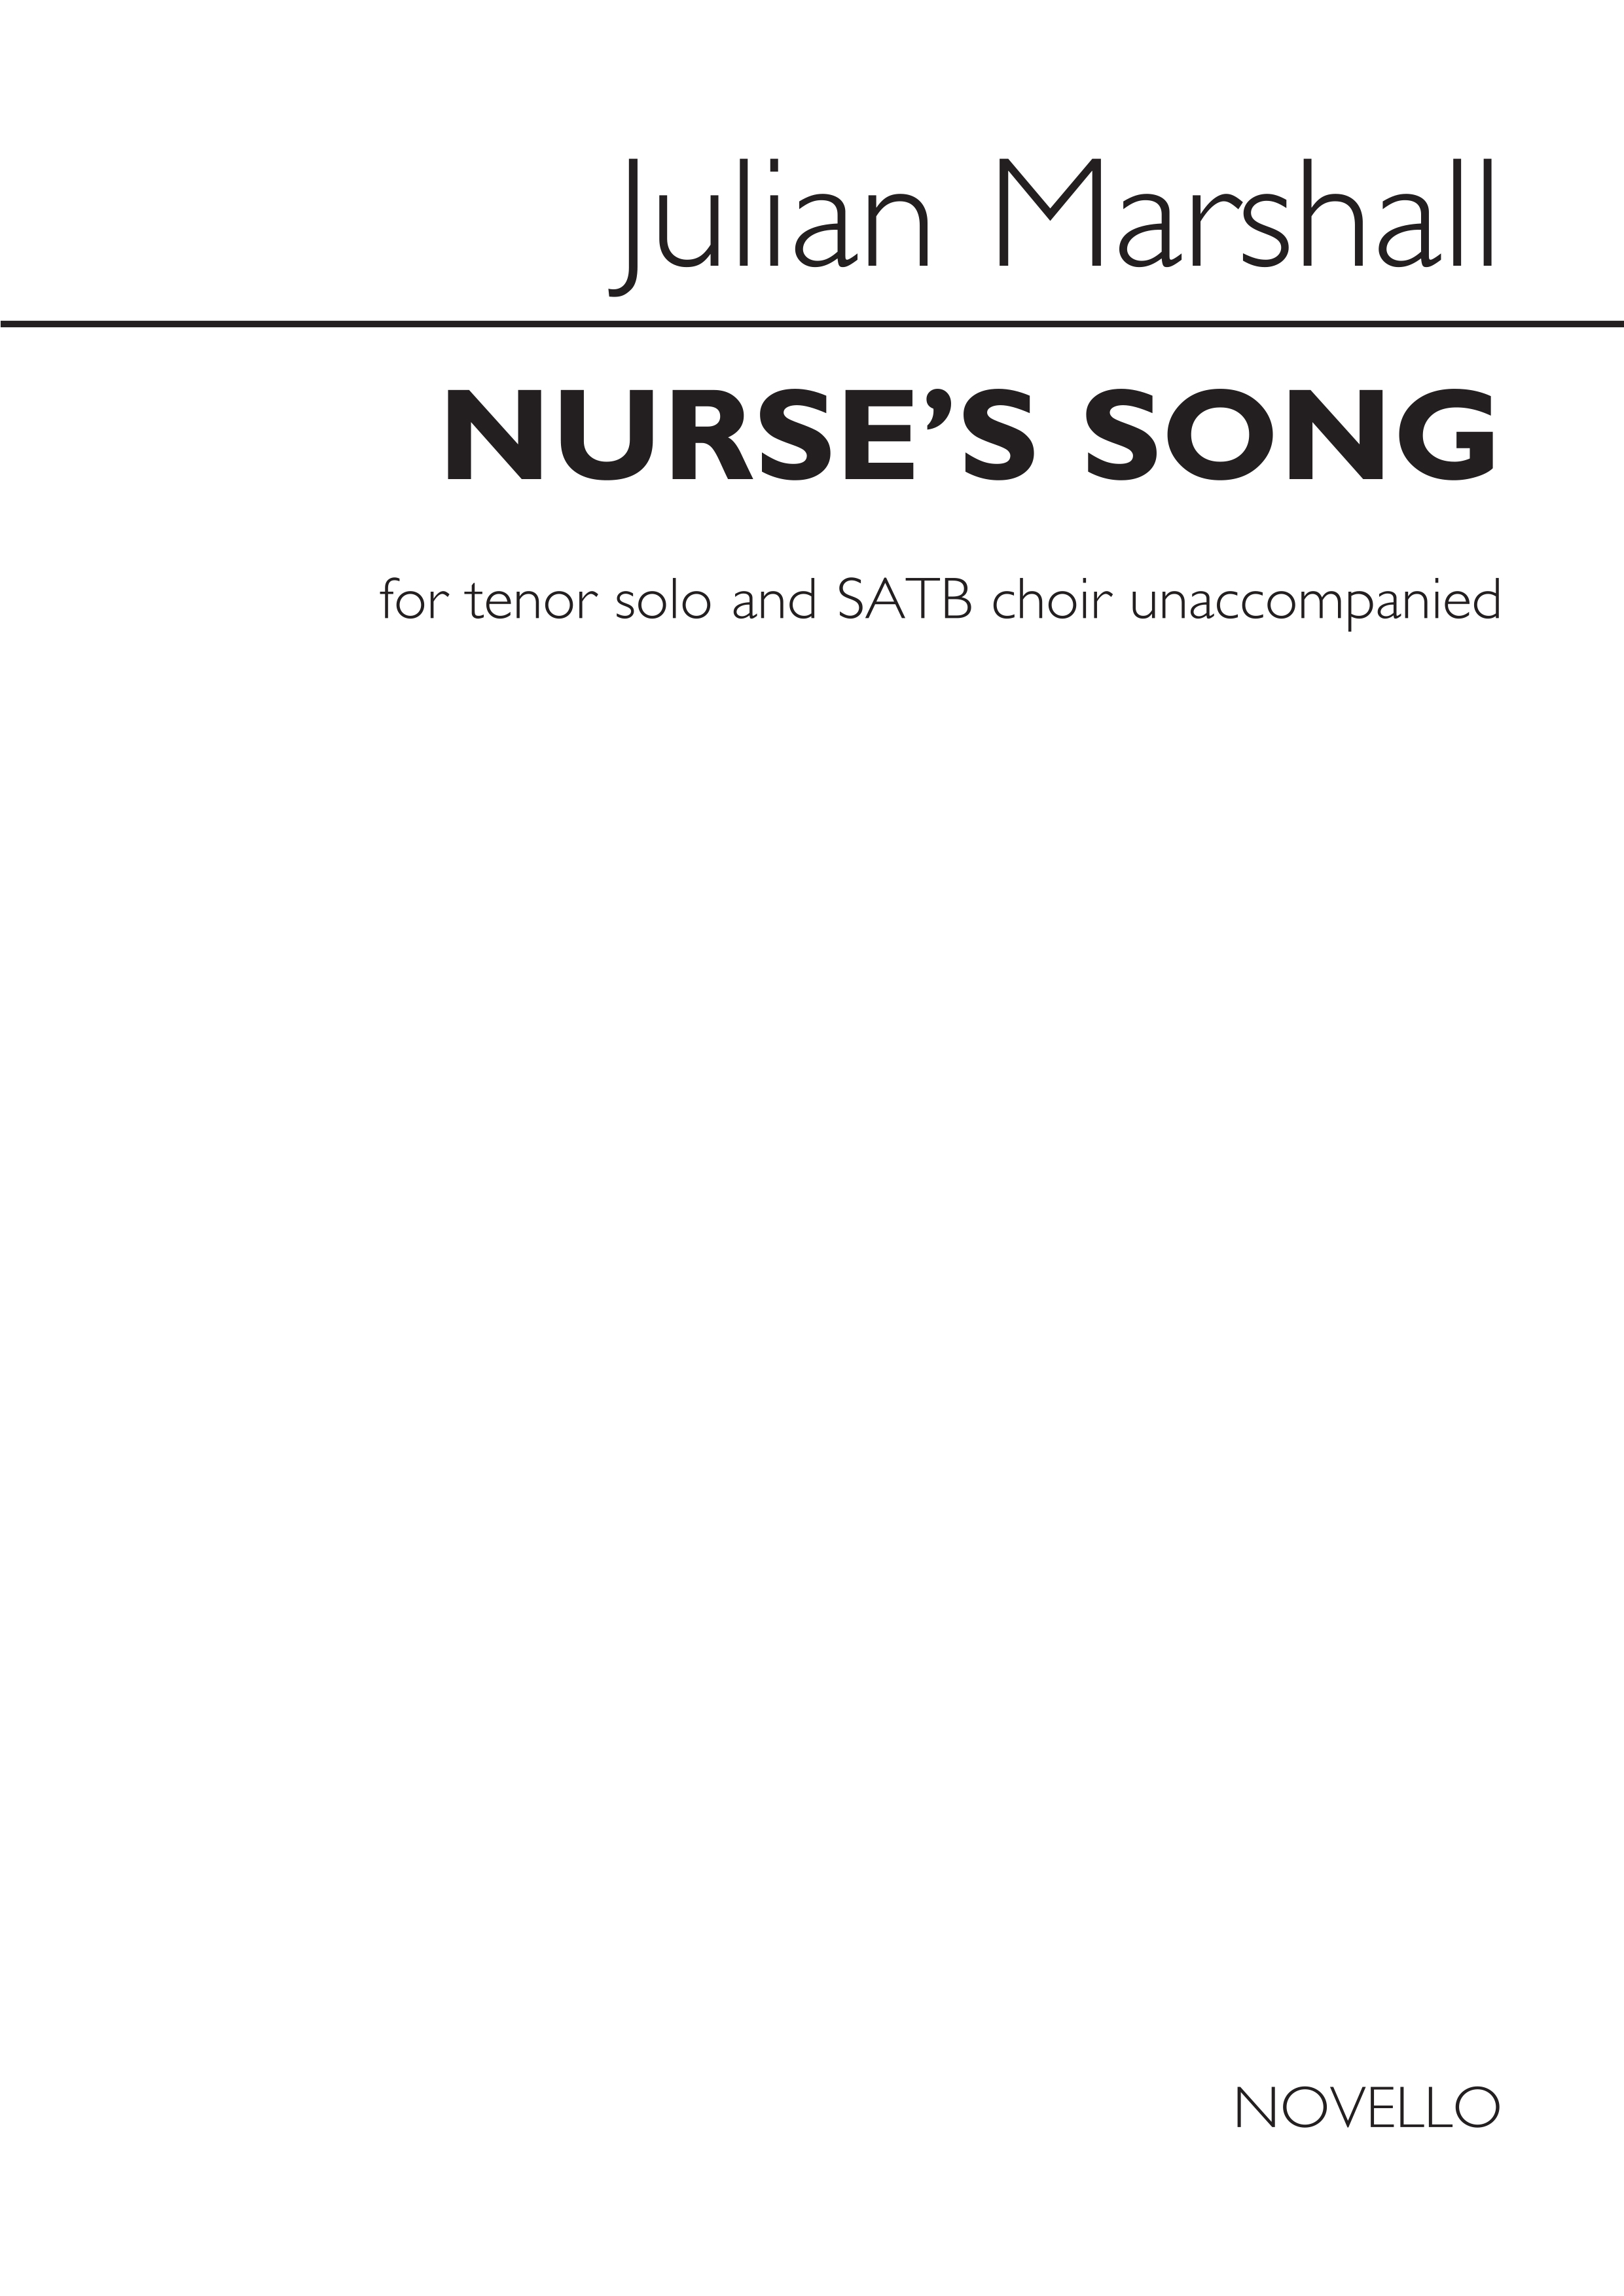 Julian Marshall: Julian Marshall: Nurse's Song: Tenor & SATB: Vocal Score